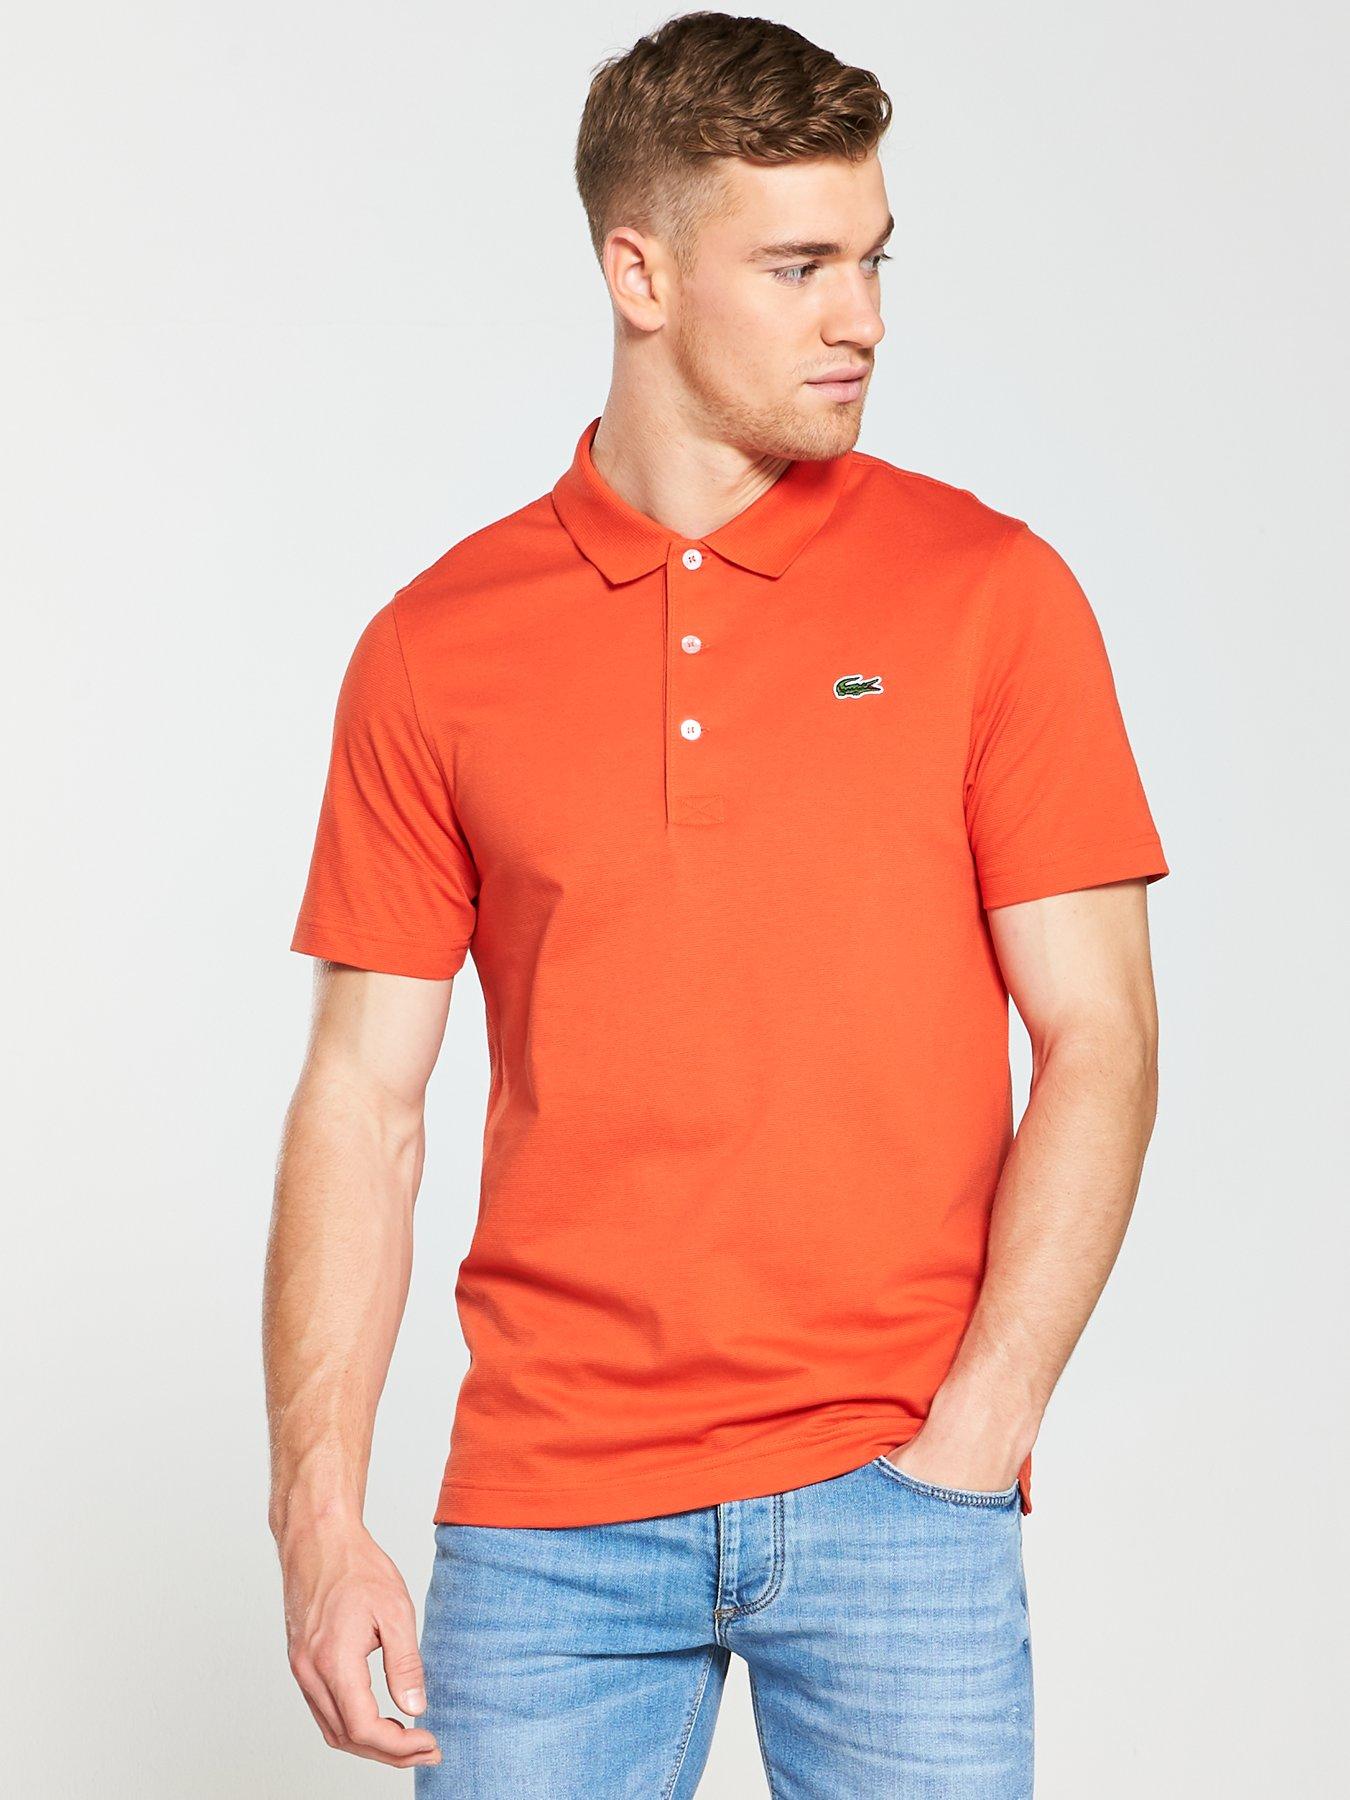 orange lacoste polo shirt